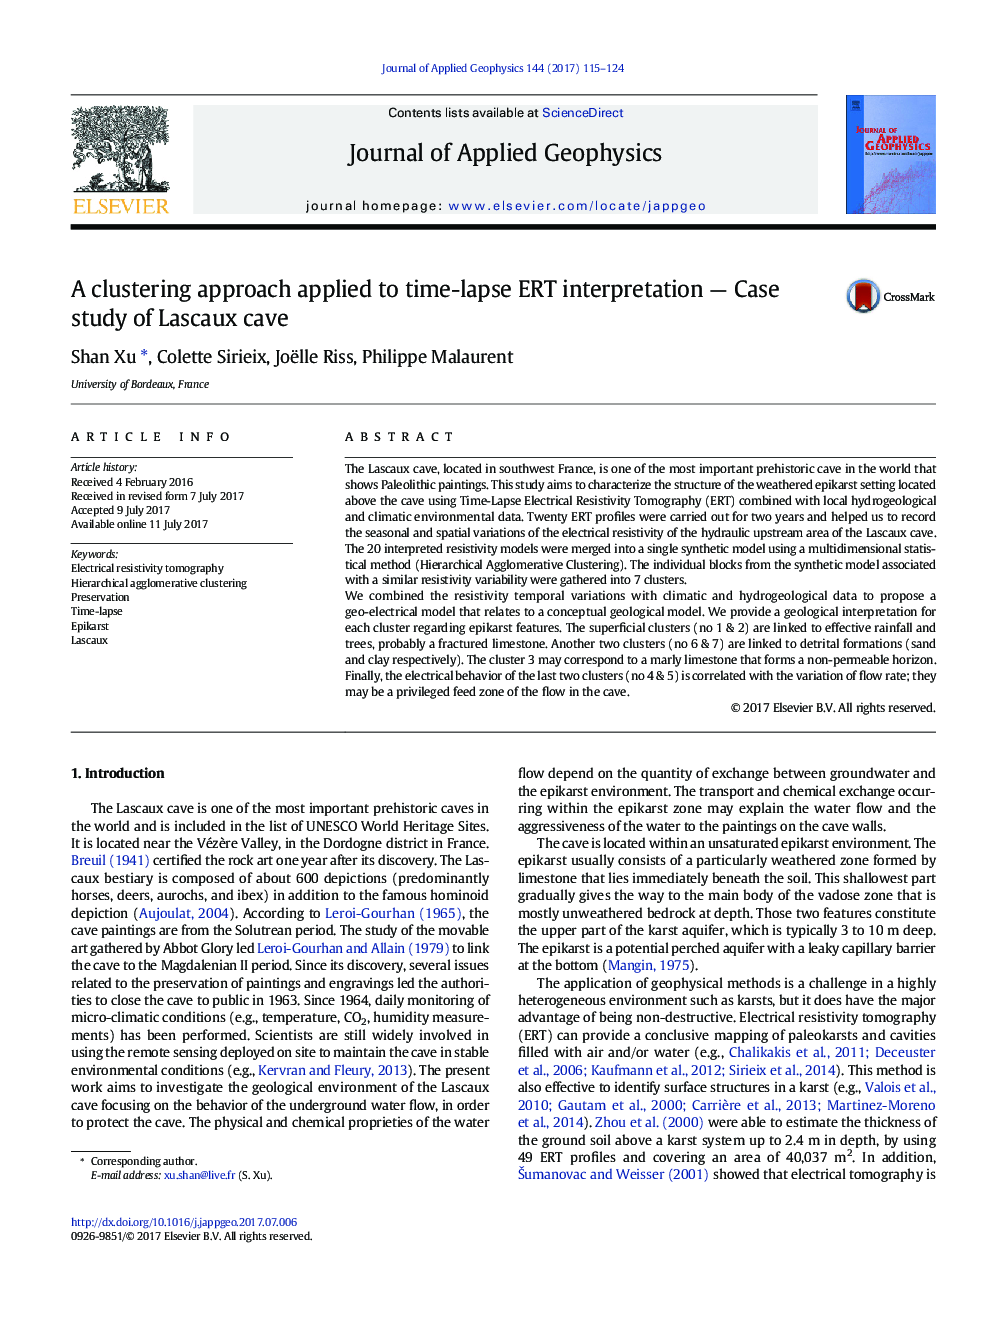 A clustering approach applied to time-lapse ERT interpretation - Case study of Lascaux cave